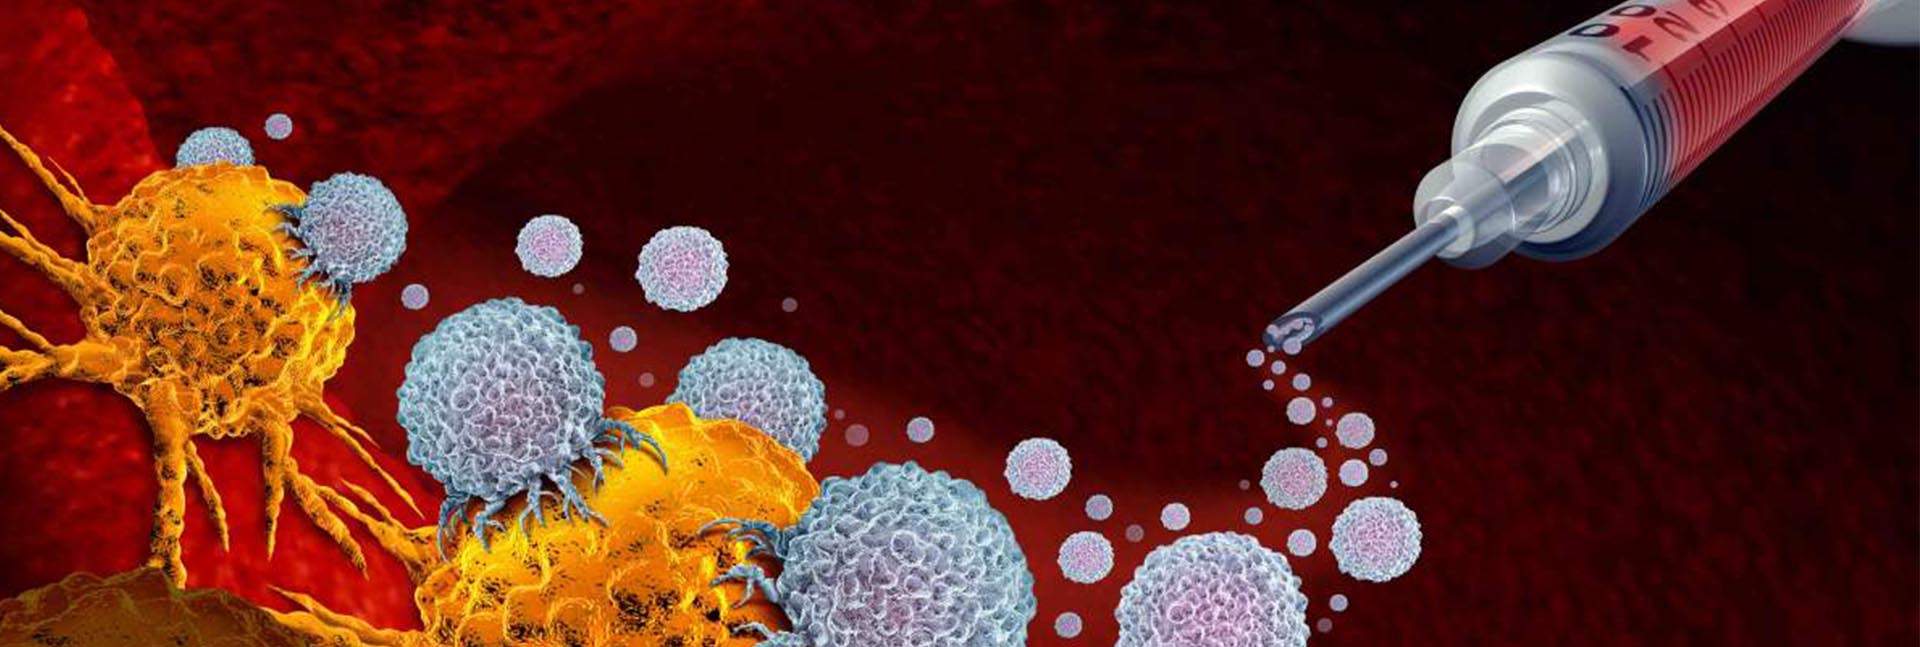 immunotherapy illustration